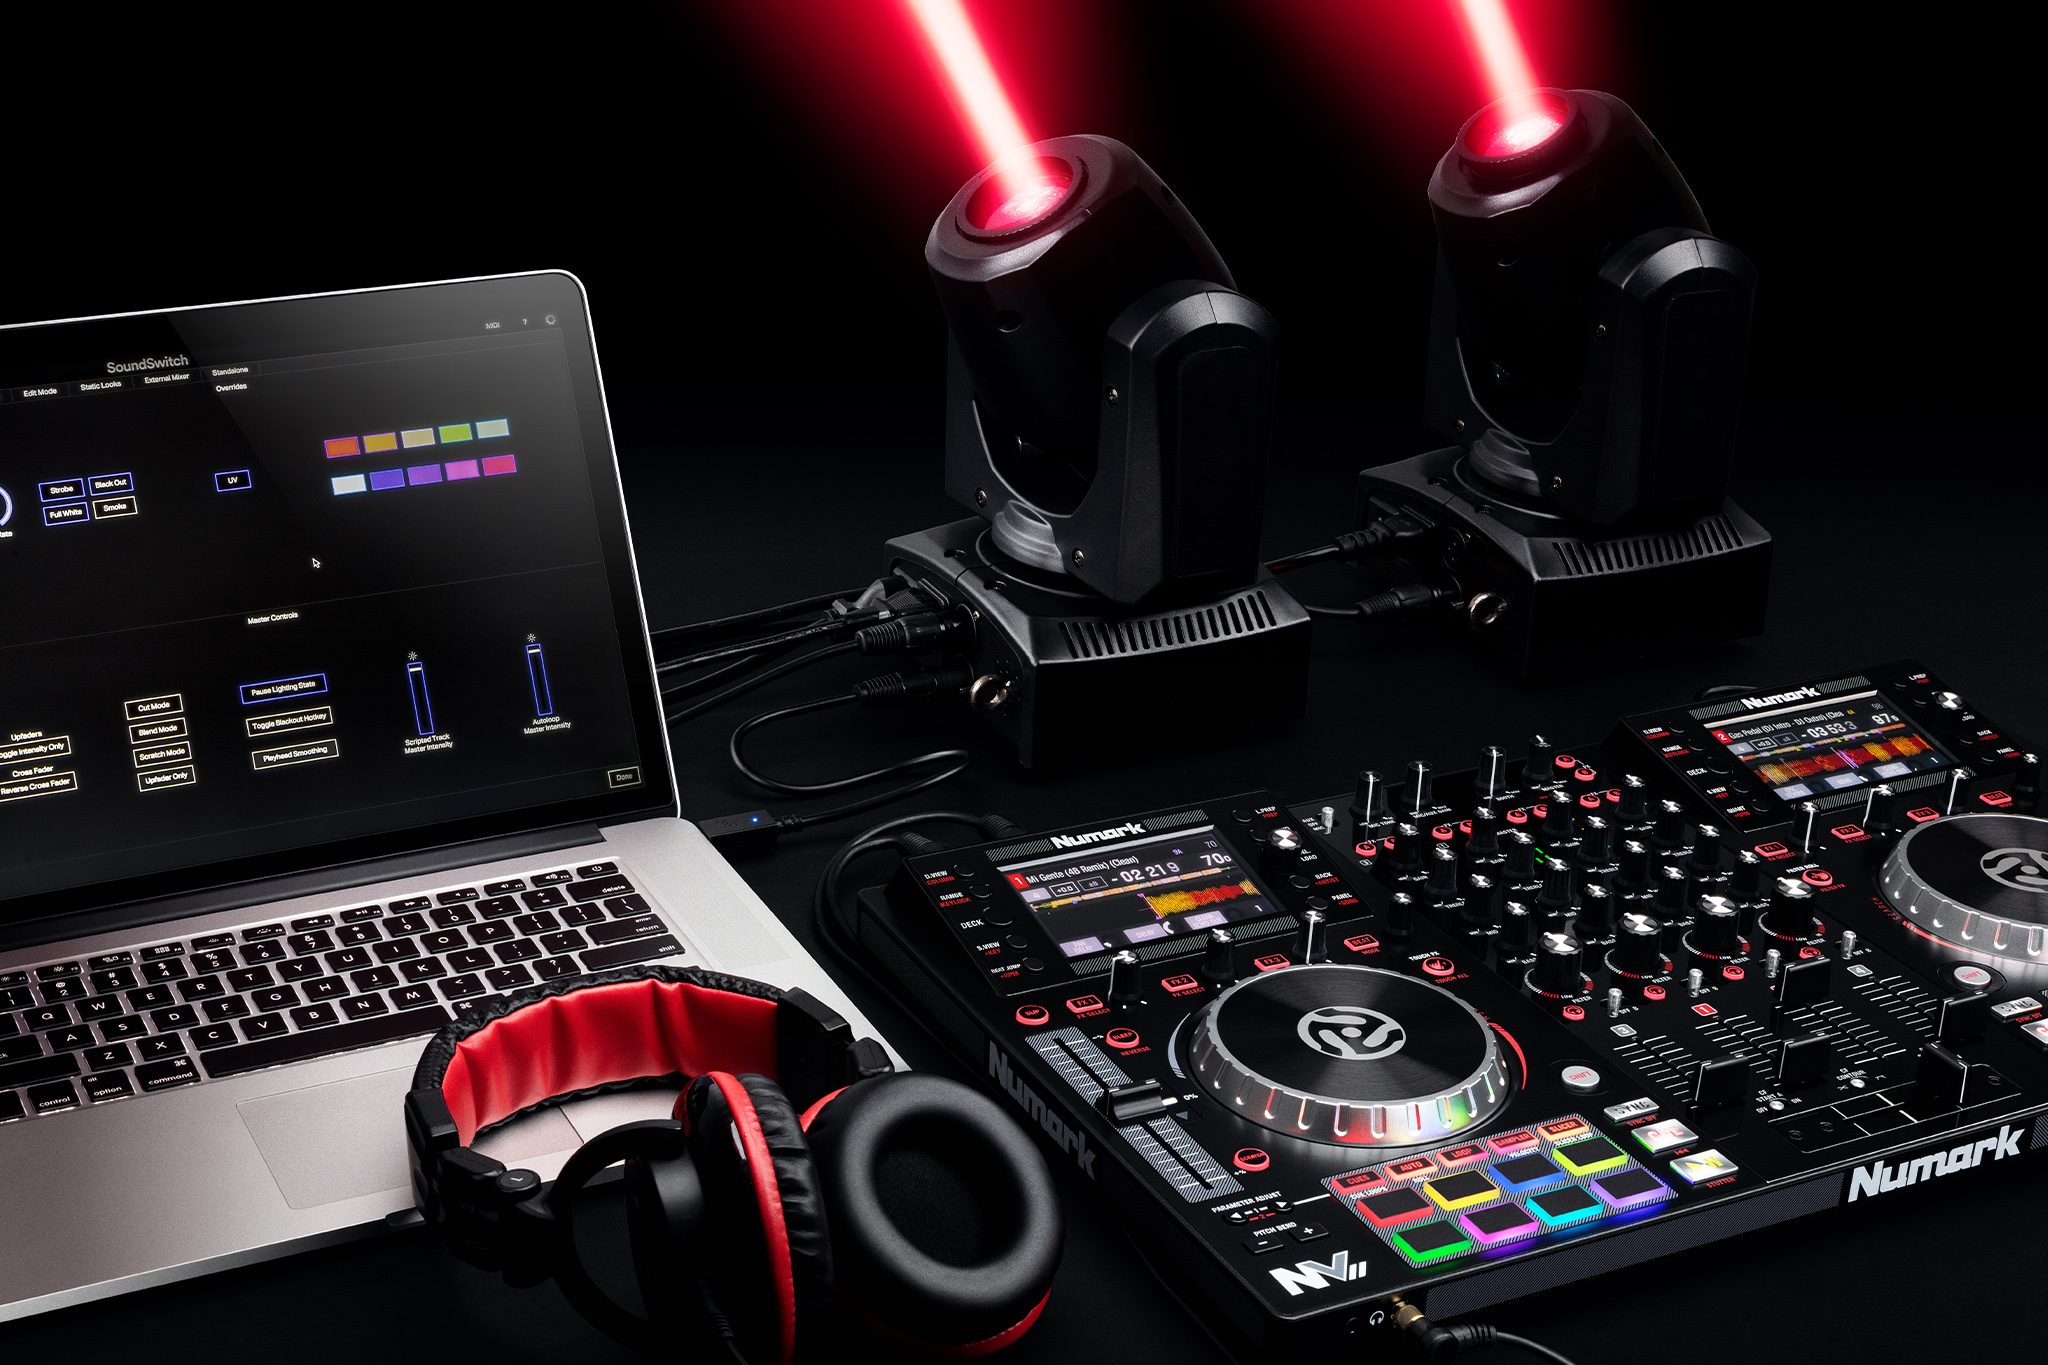 SoundSwitch Desktop DMX lighting software for DJs and Philips HUE used along side a Numark Controller for Serato DJ